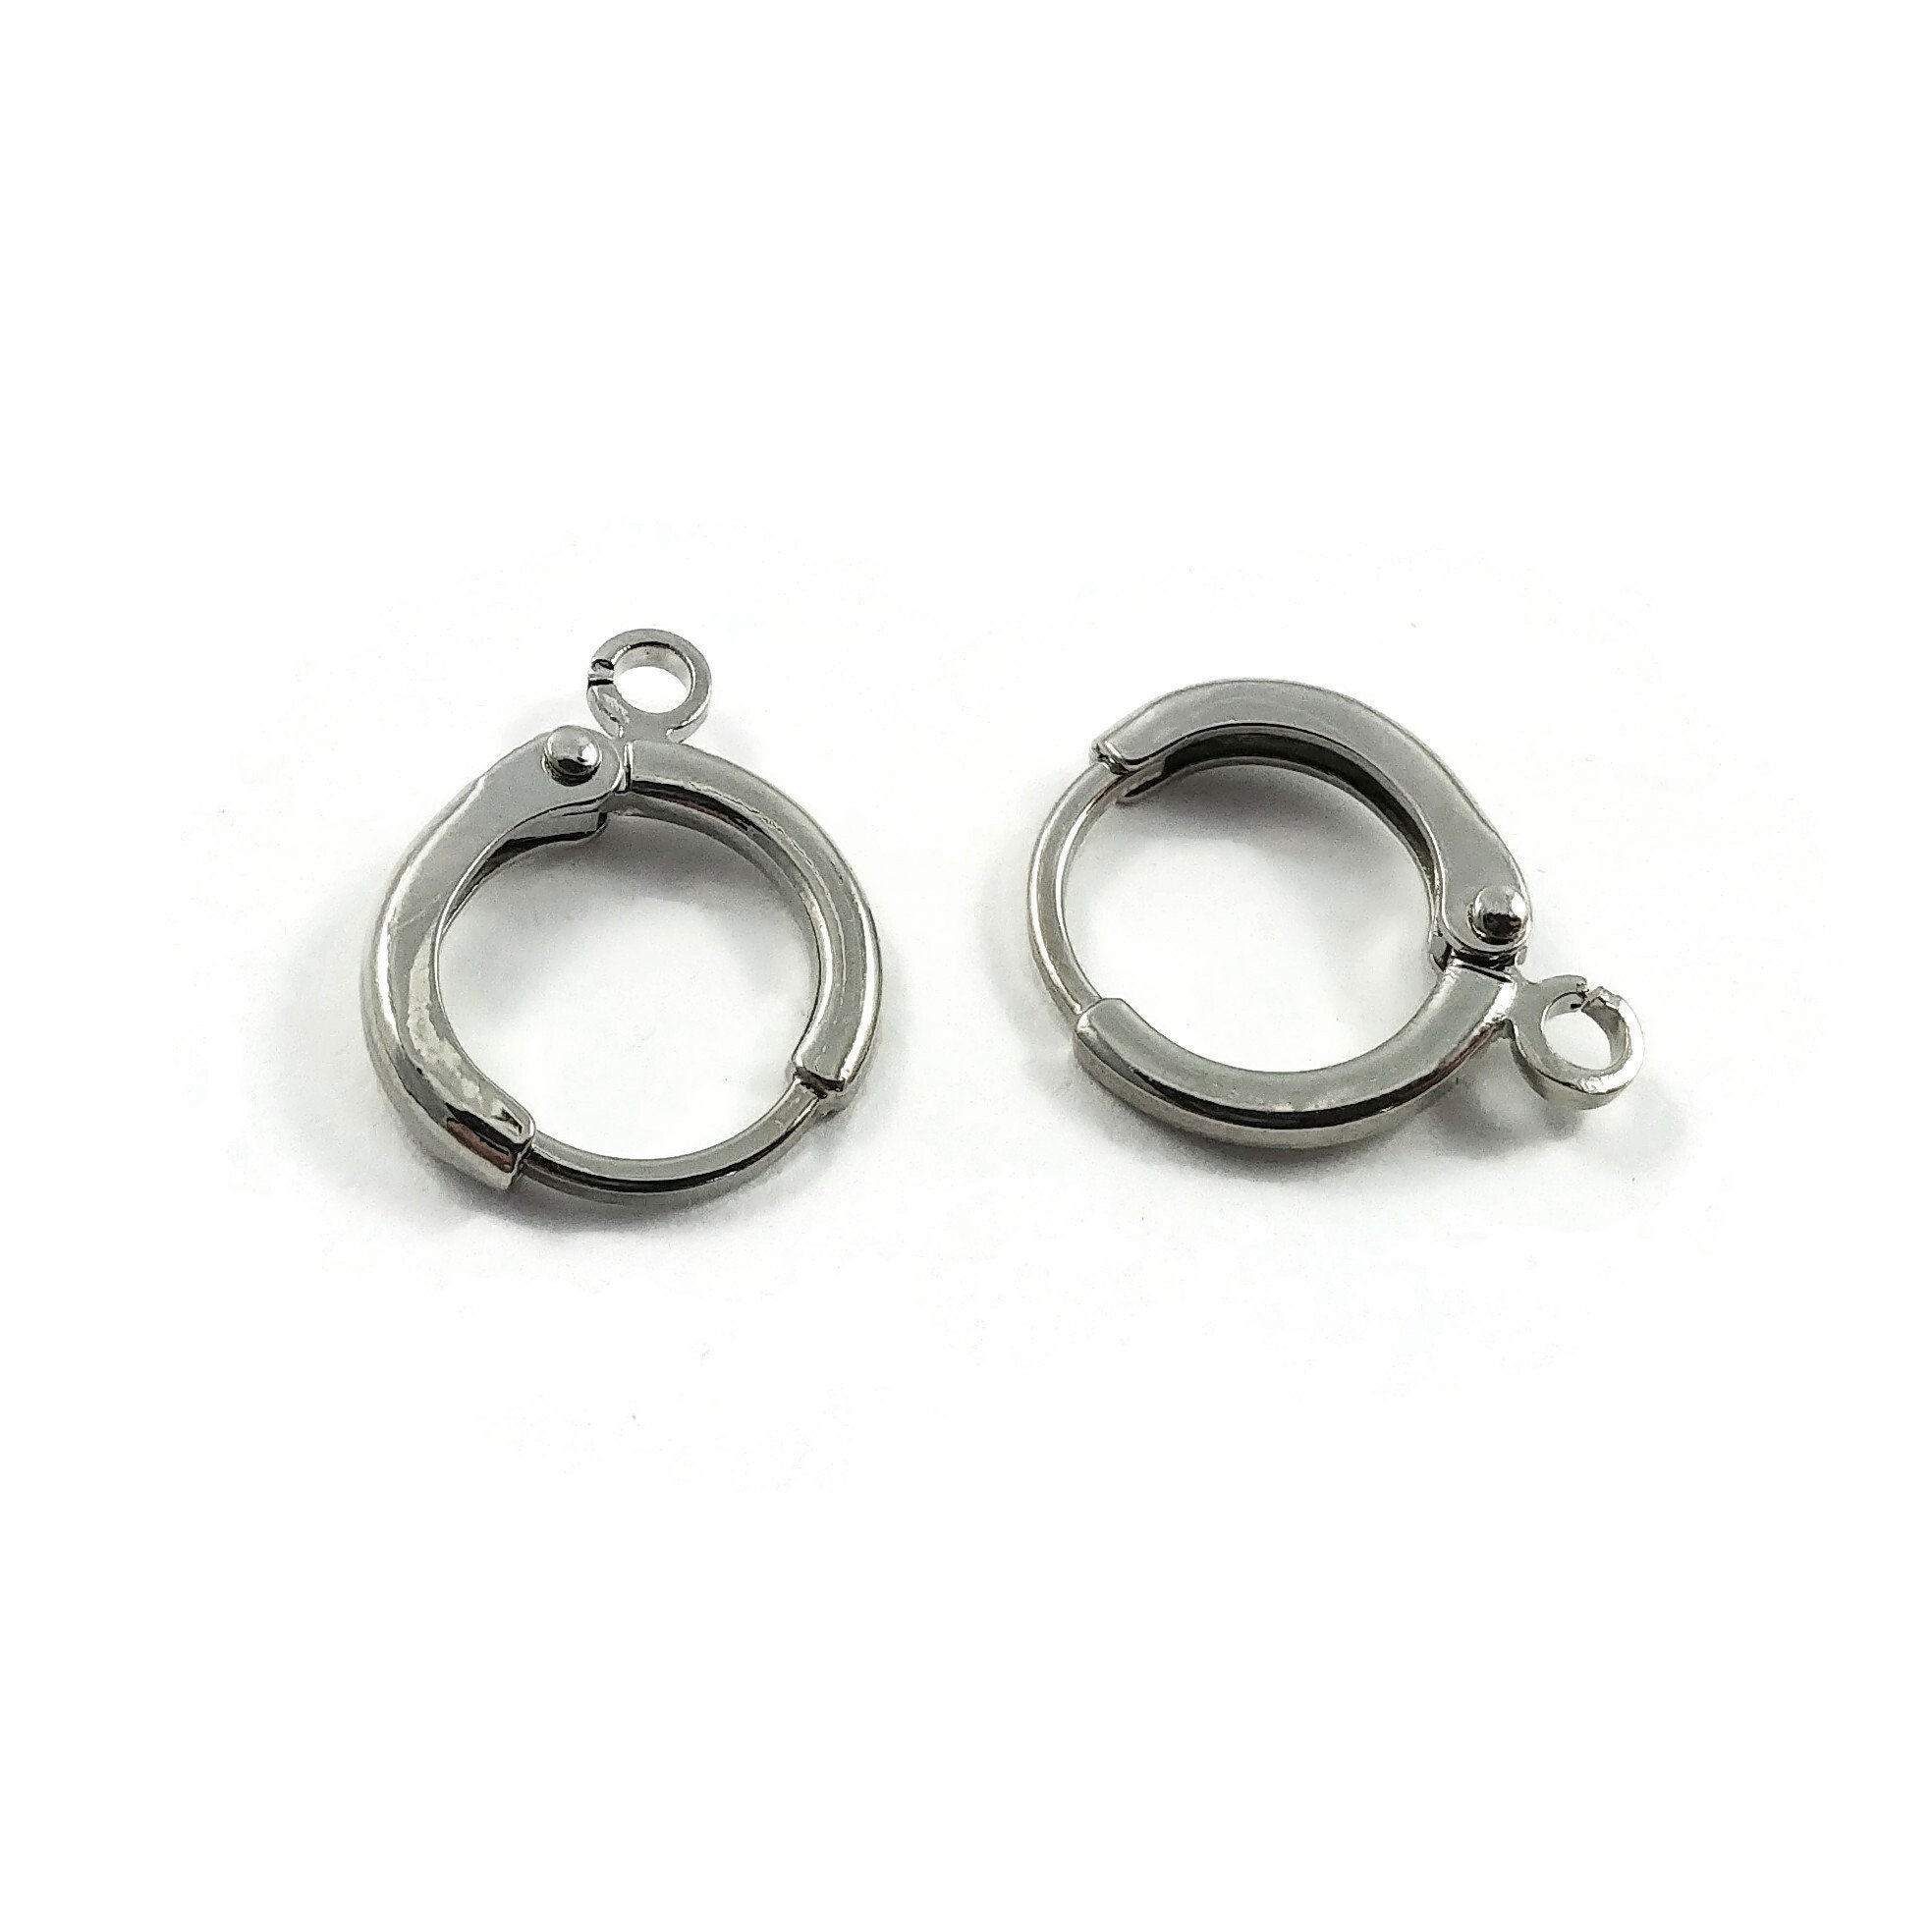 Gold, Silver, Huggie hoops with loop, Nickel free brass earring findings, Leverback ear wire for jewelry making